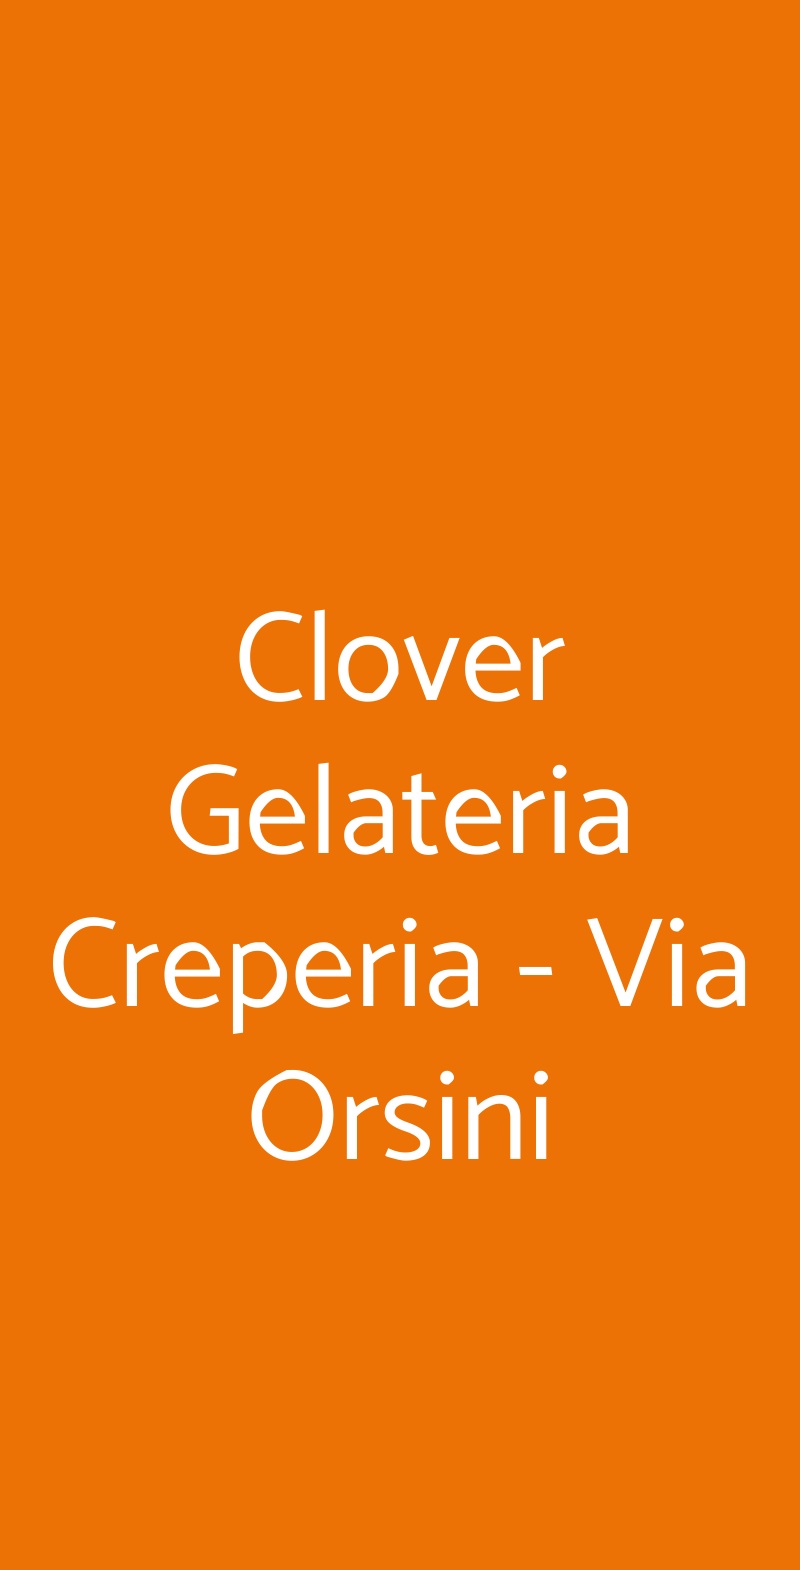 Clover Gelateria Creperia - Via Orsini Milano menù 1 pagina